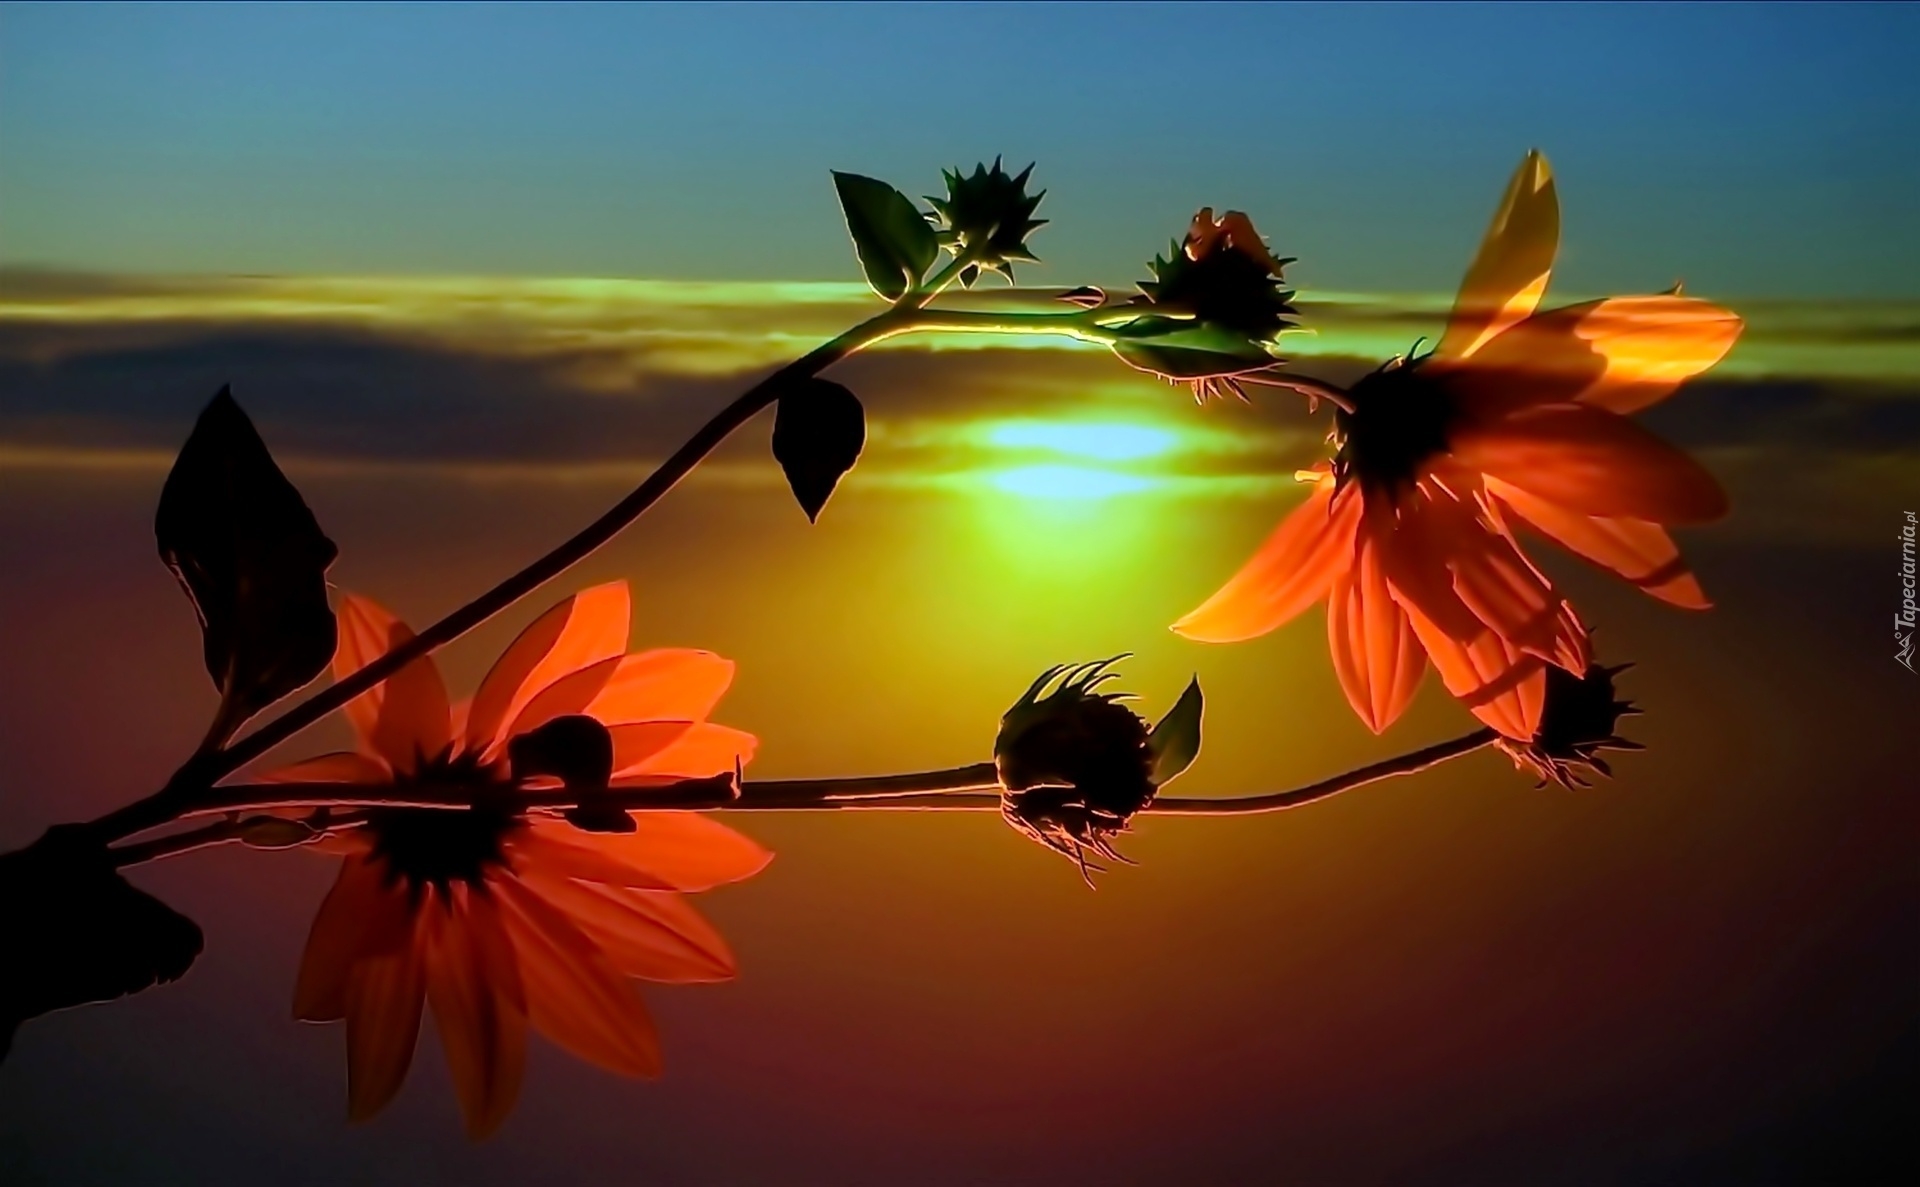 Картинка добрый вечер весенняя природа. Цветы на фоне заката. Вечерние цветы. Цветы на закате солнца. Чудесный закат.